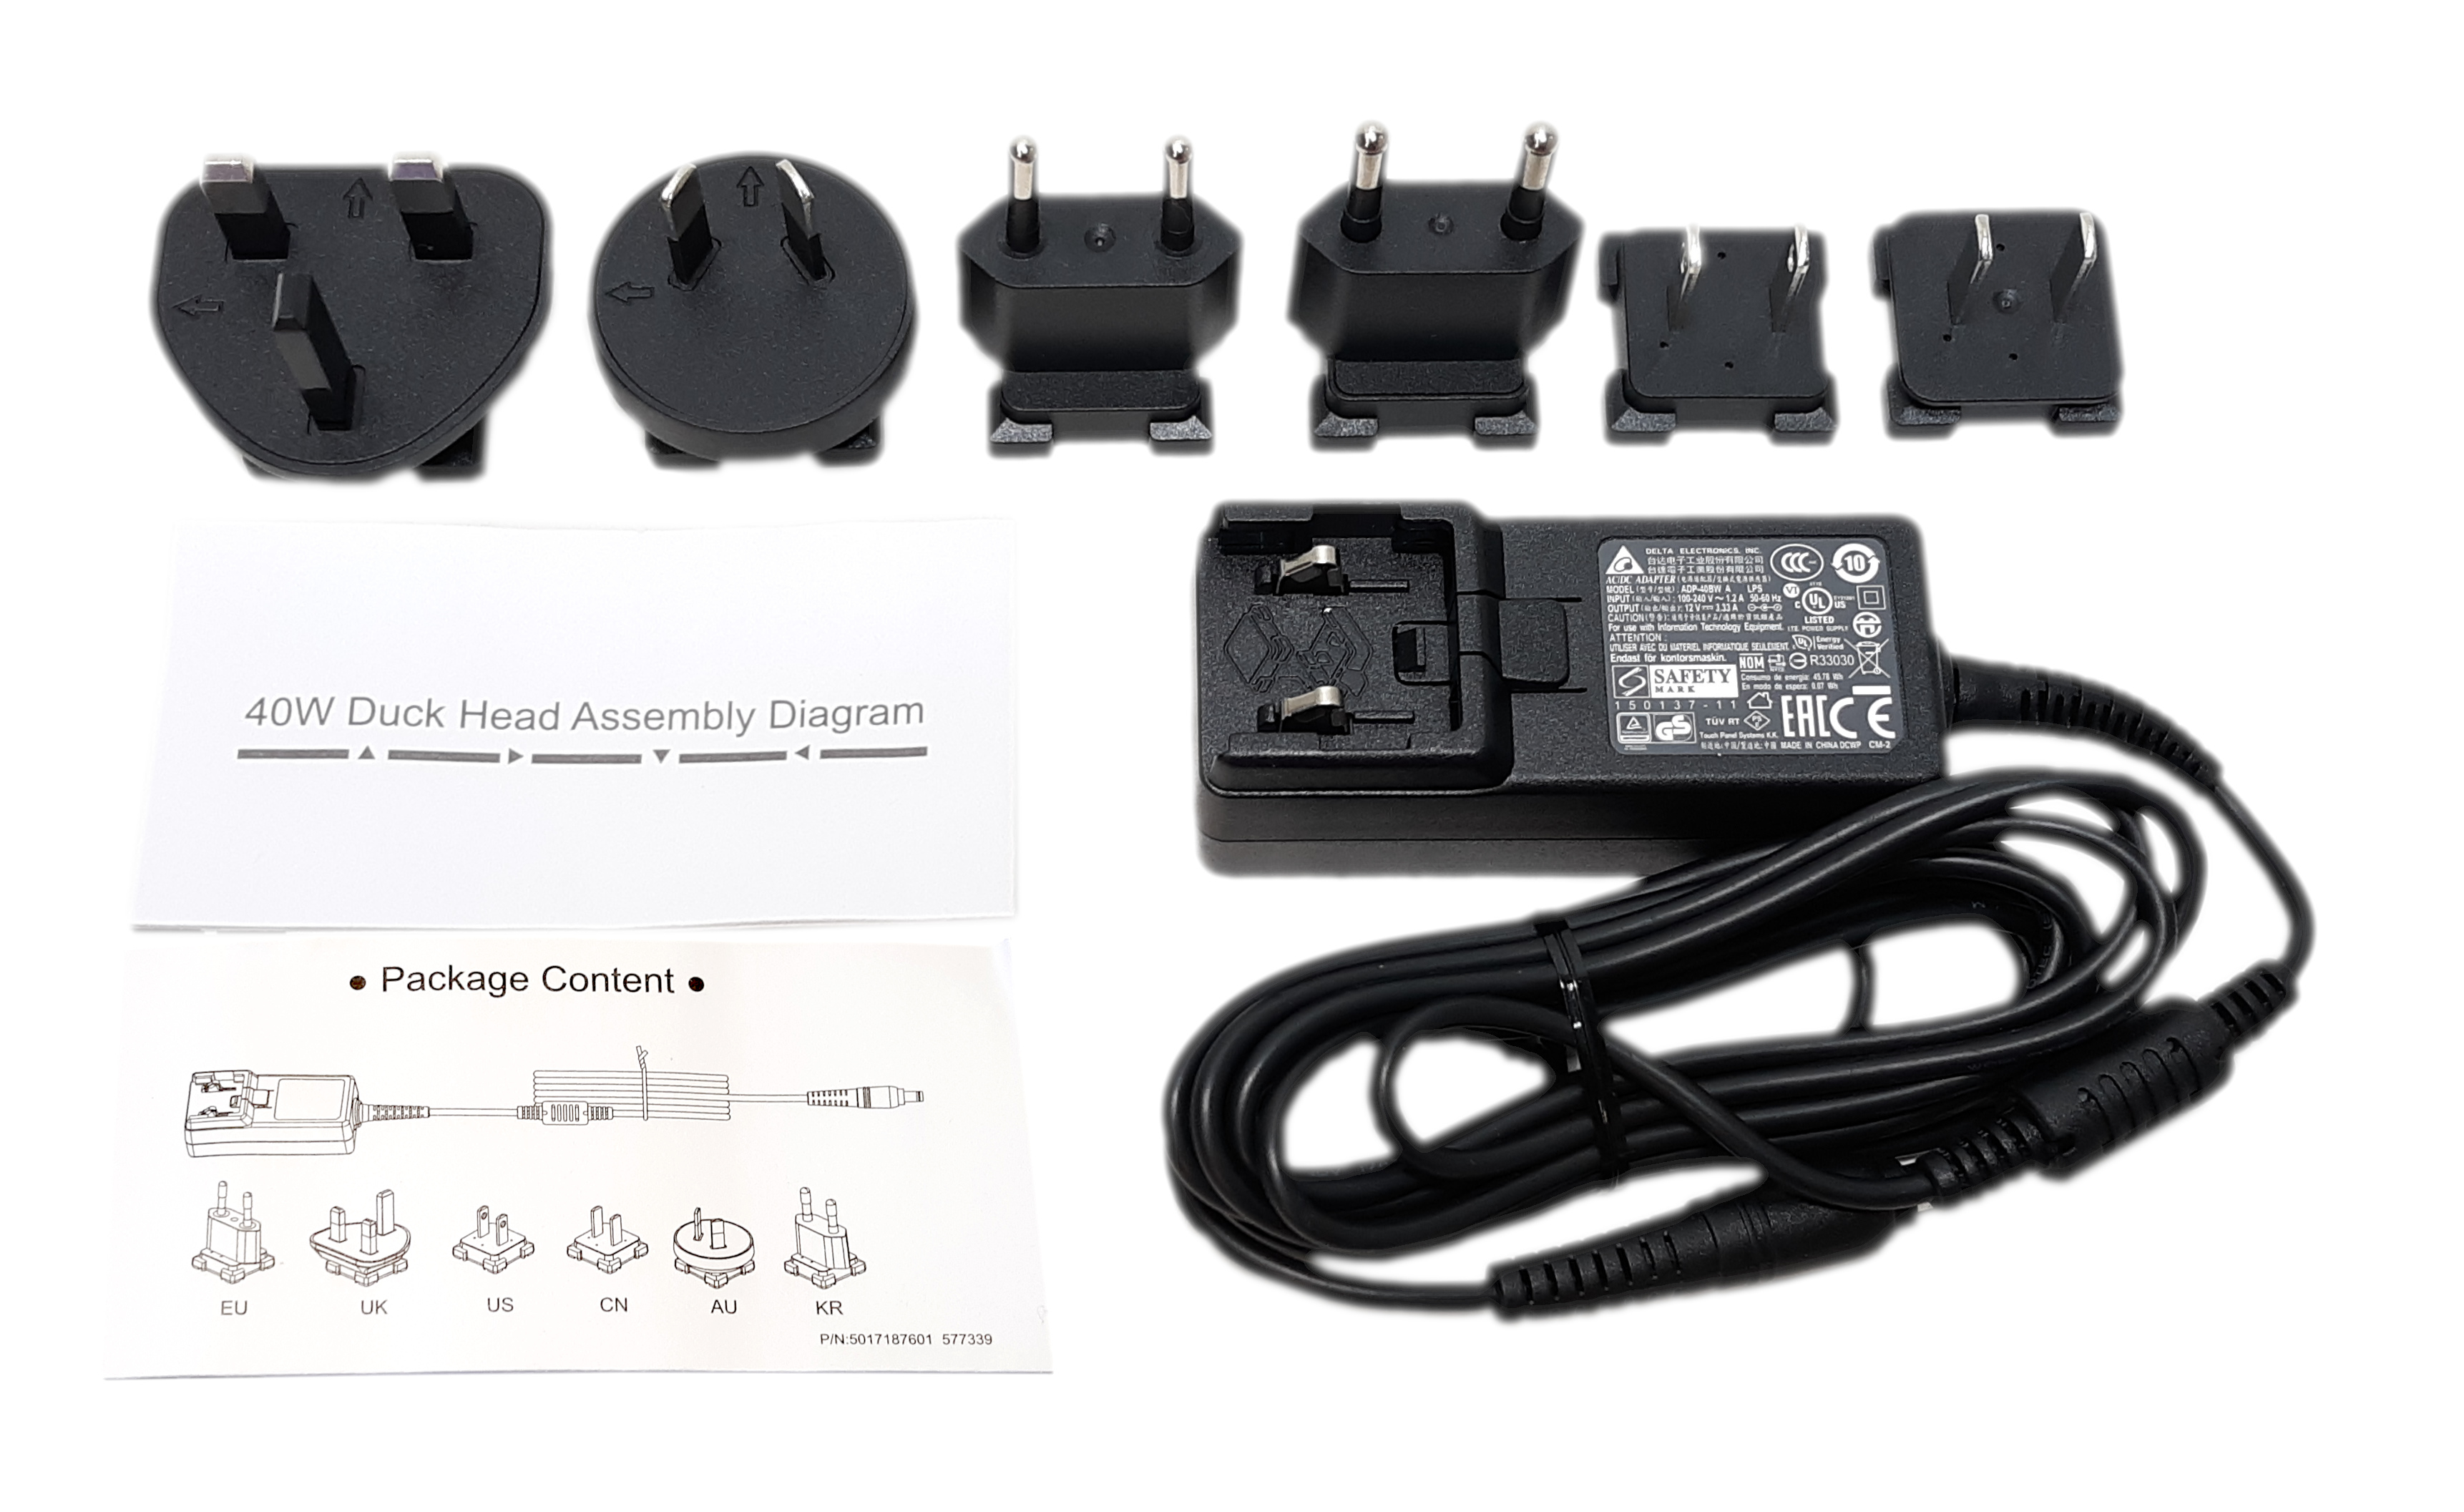 Delta Electronics AC Adapter ADP-40BW A Input: 100-240V 1.2A Output: 12V/3.33A ELO-Kit-02 Power Brick 3m-R E210973